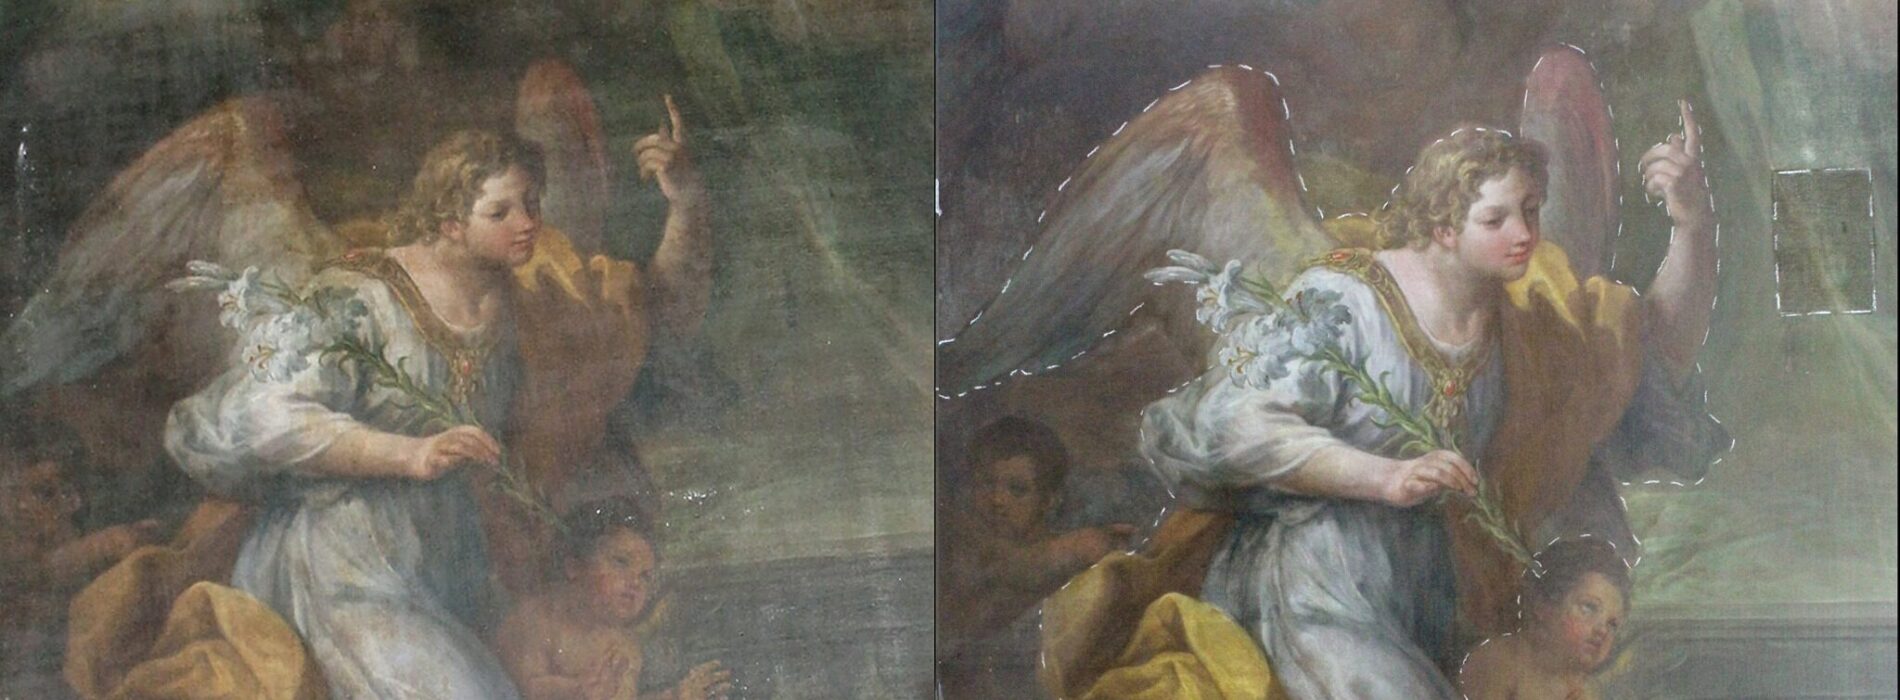 C’è Intesa, “restituita” l’Annunciazione di Sebastiano Conca